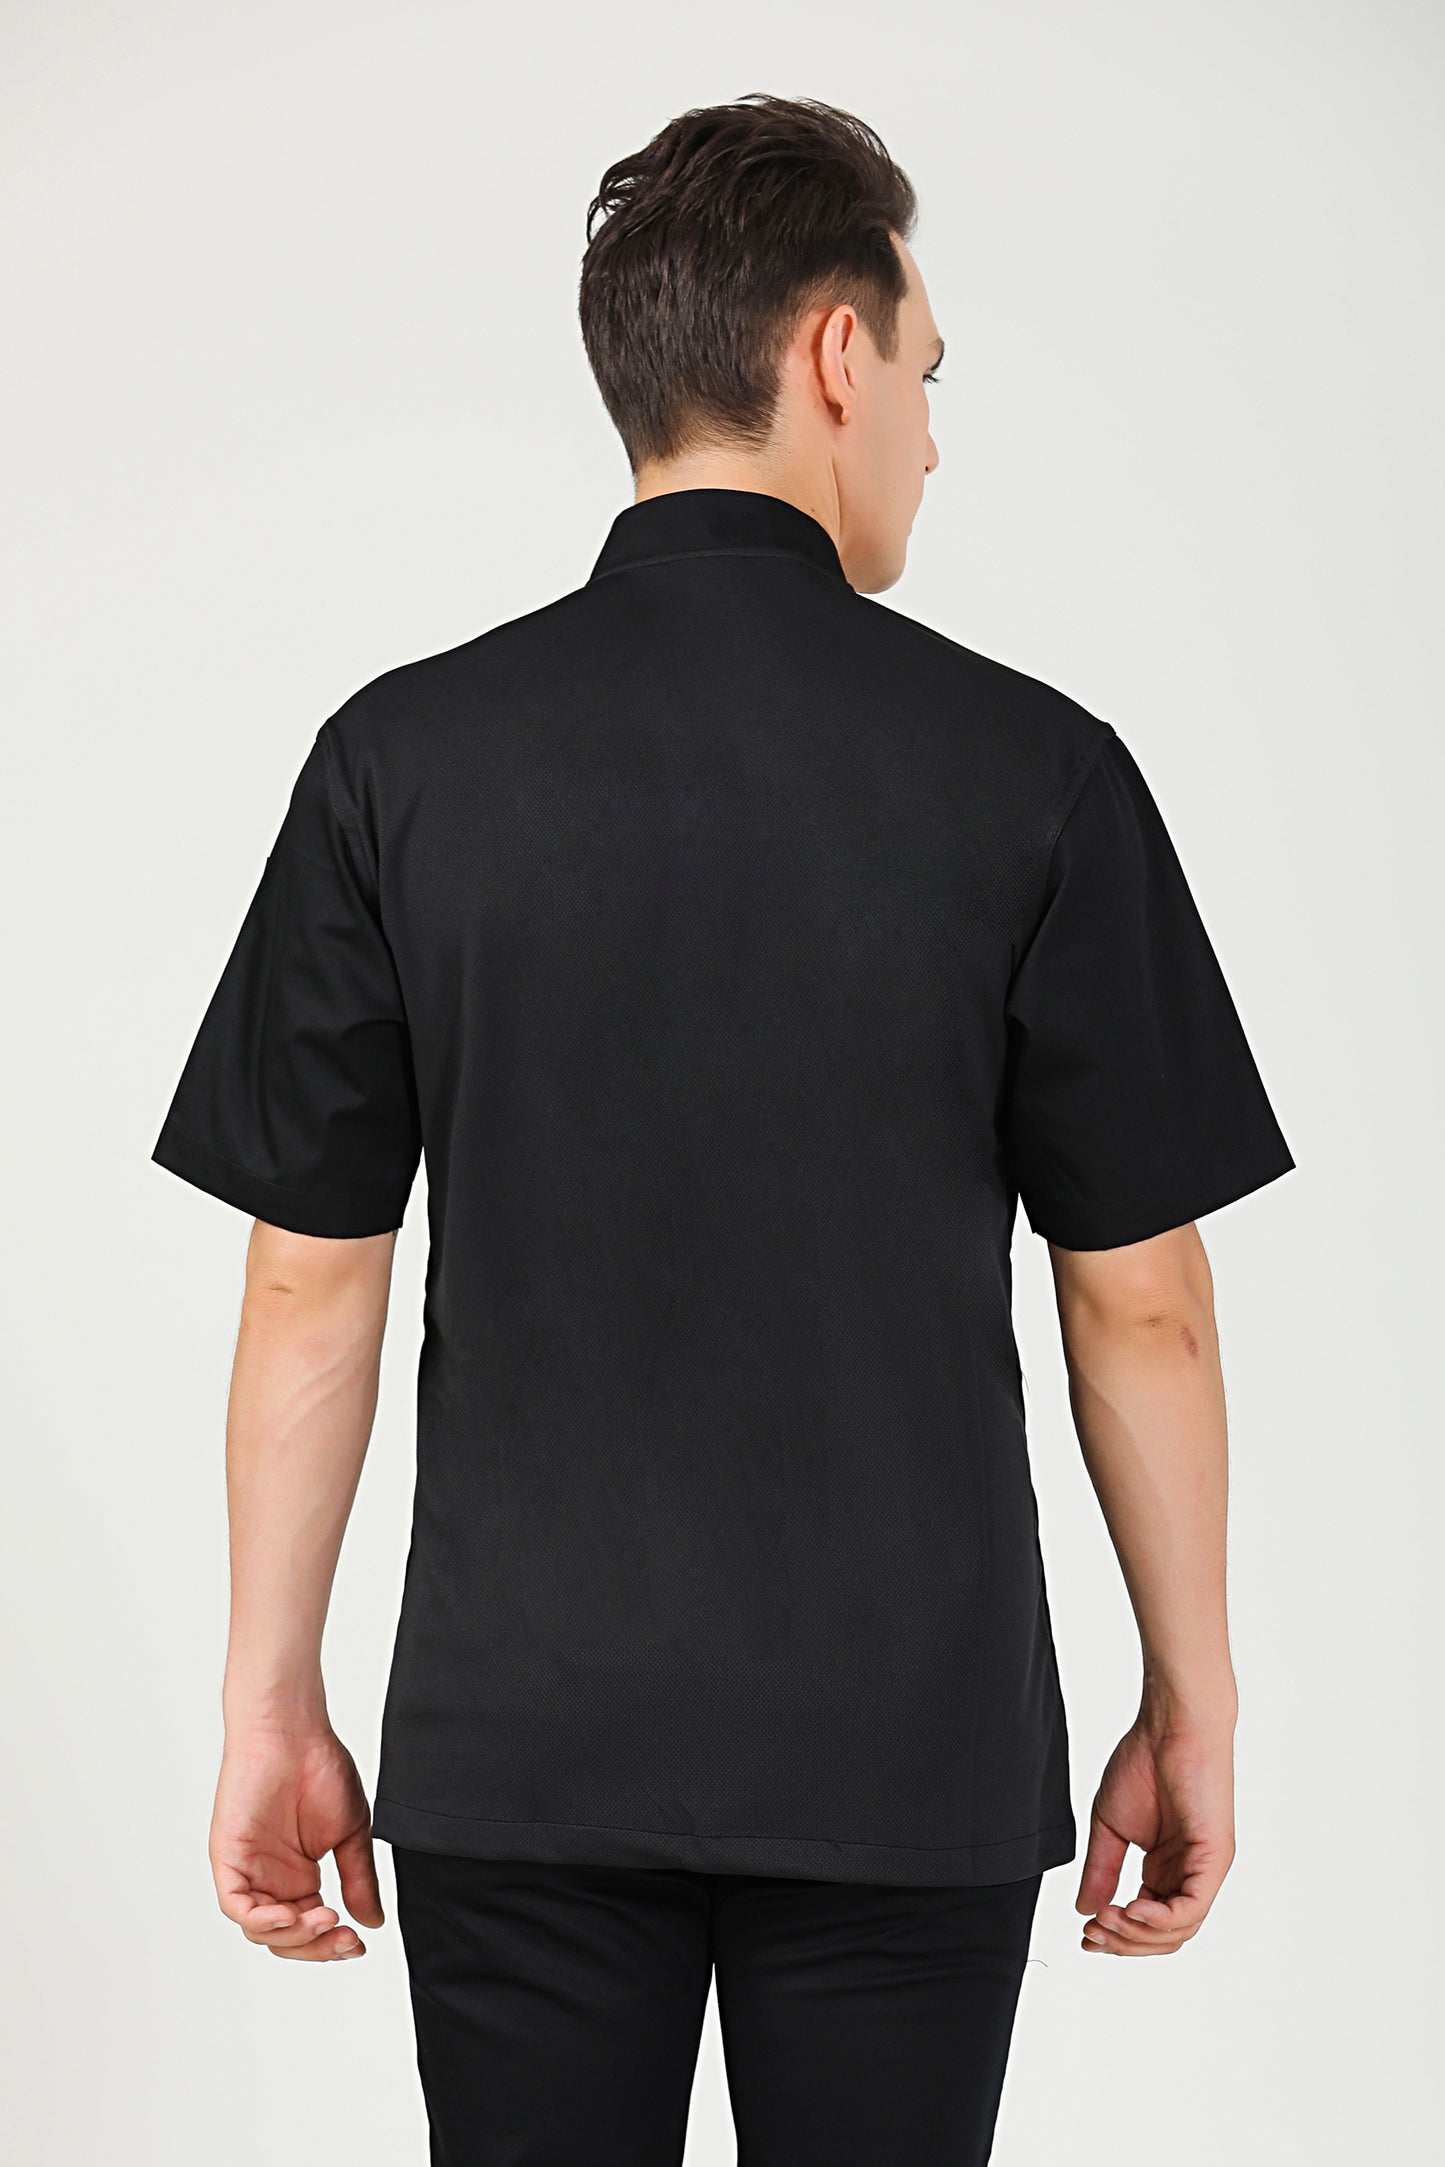 Peppermint Black Chef Jacket, Short Sleeve